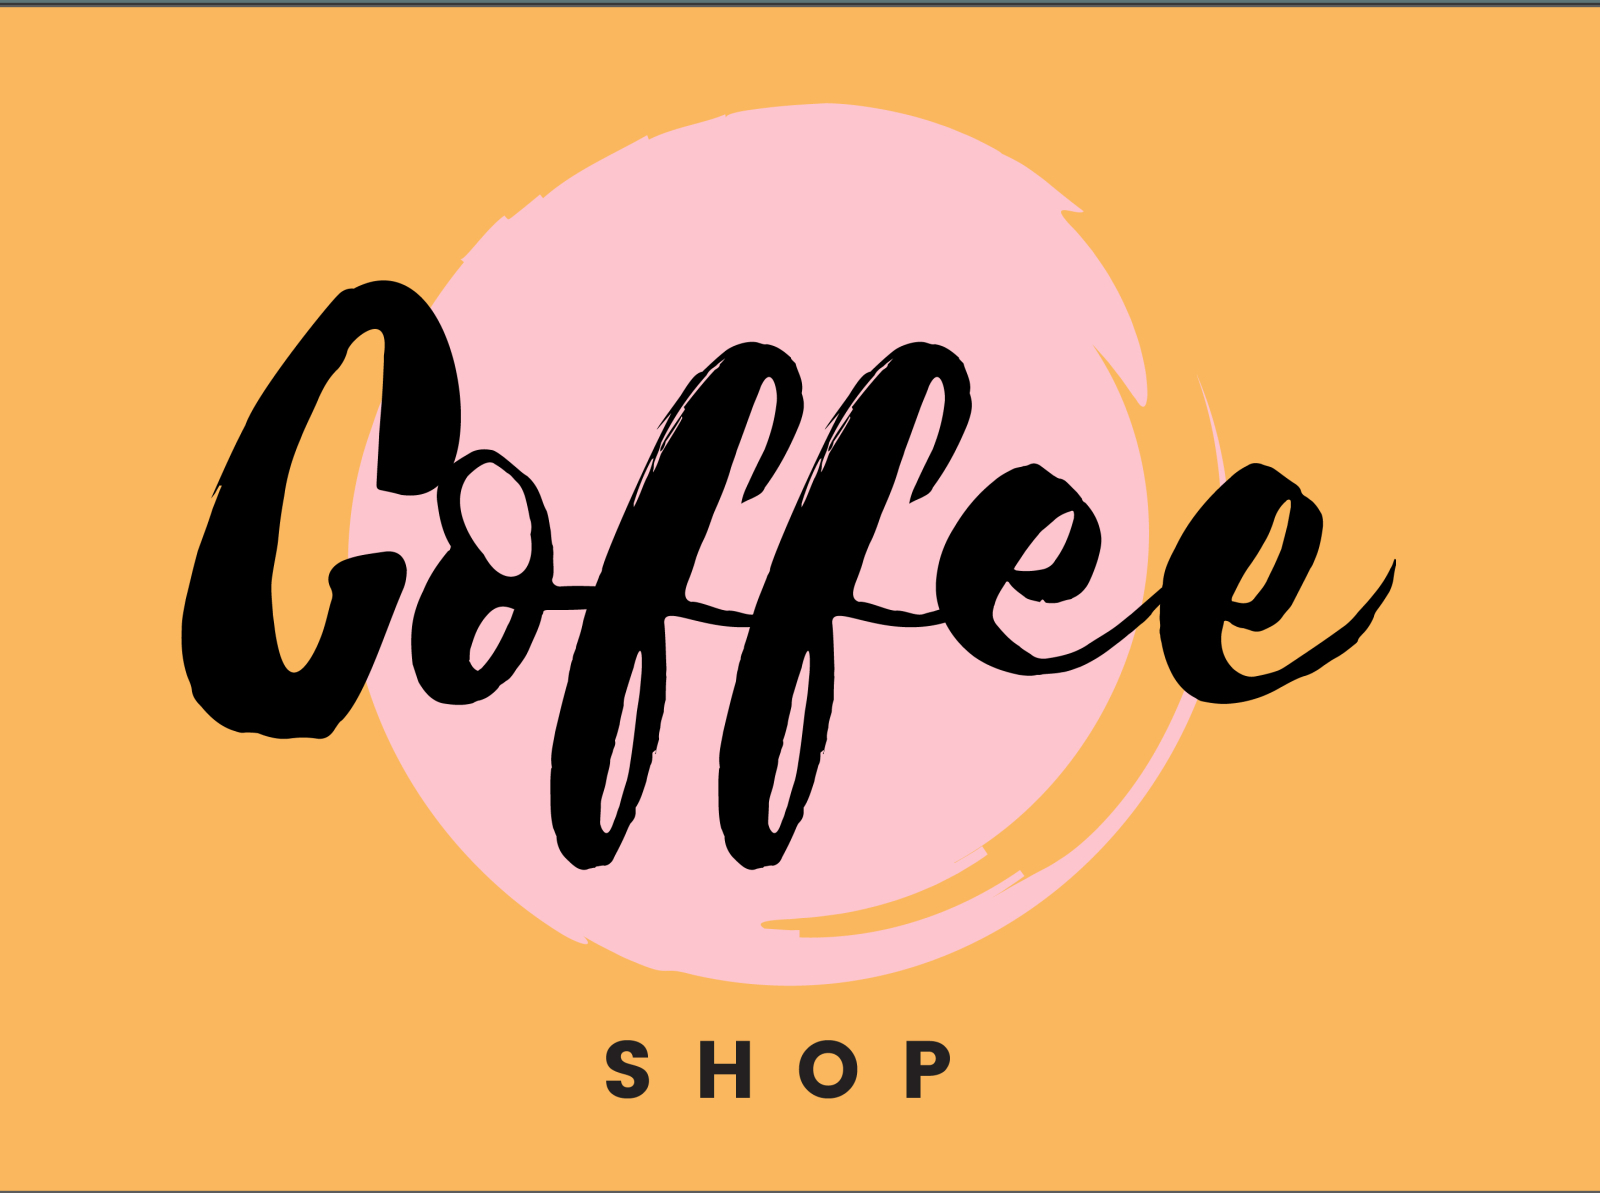 Coffee Shop Logo by Rahul G. on Dribbble